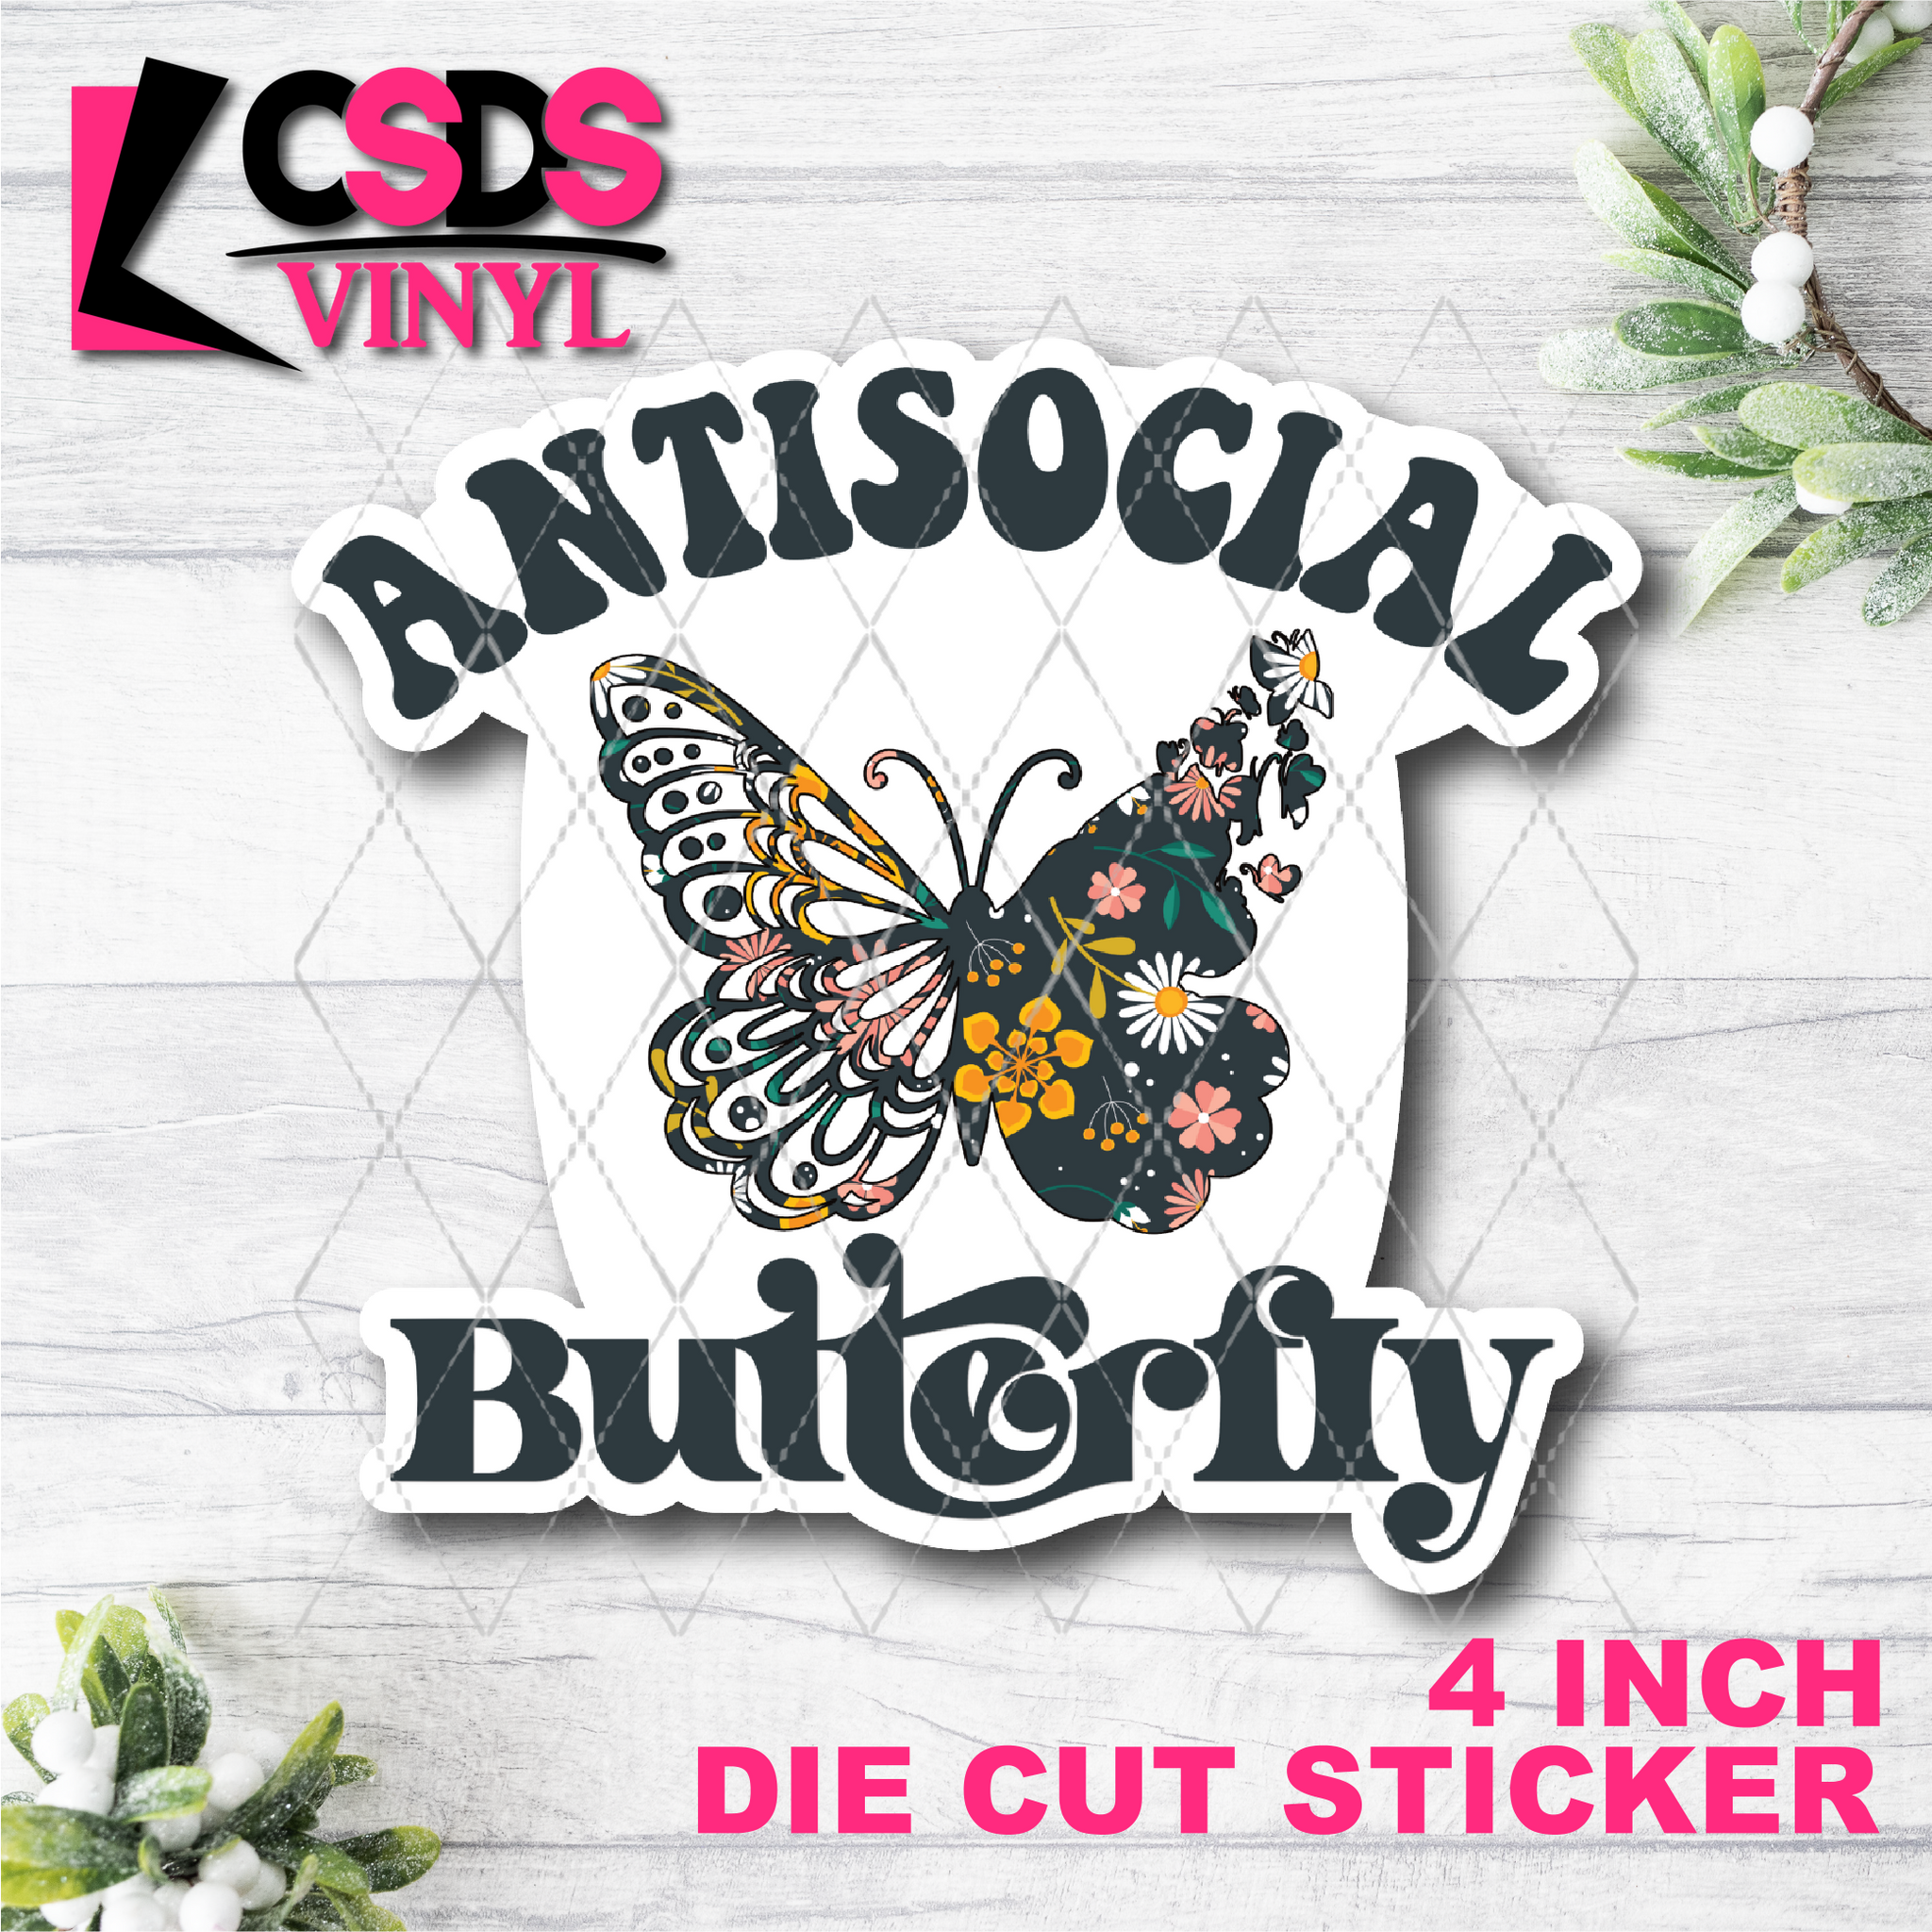 Die Cut Stickers - Die Cut Vinyl Stickers - Cut Out Stickers